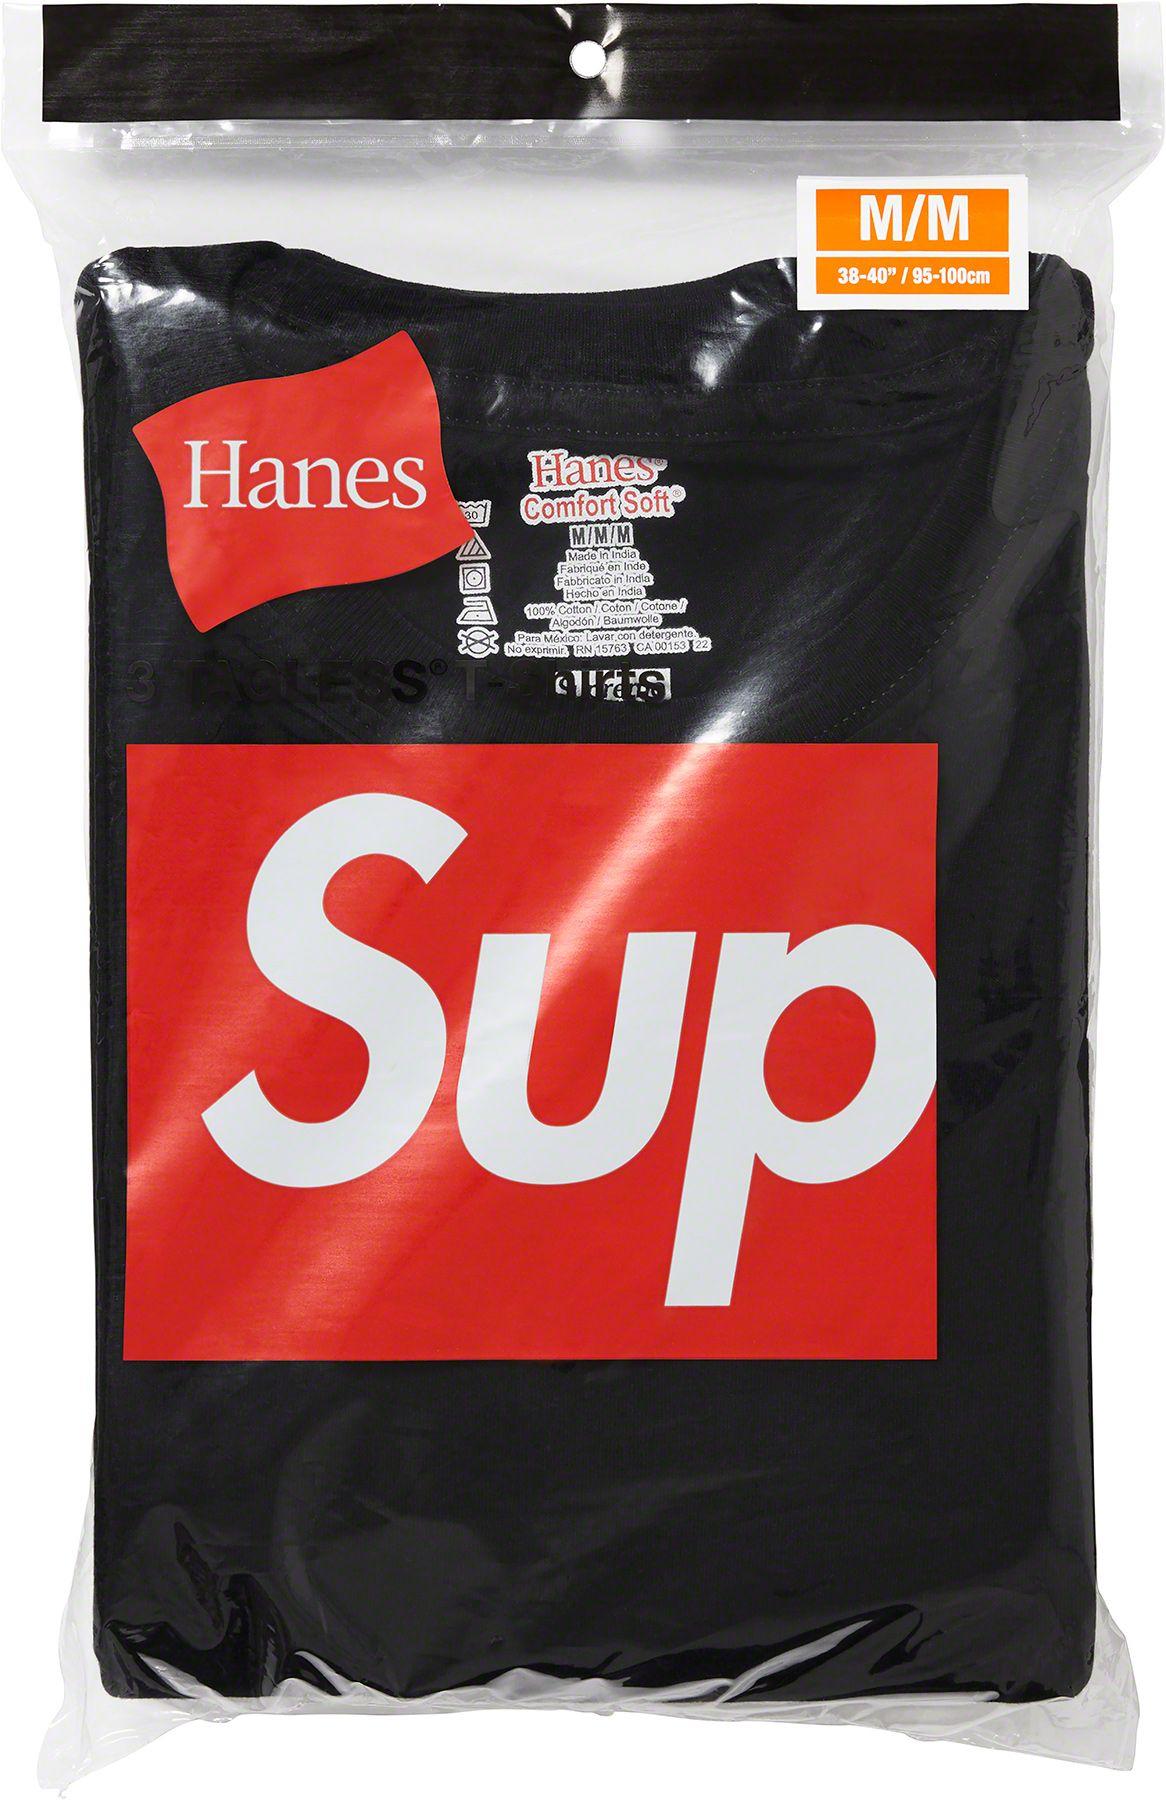 Hanes Tagless Tees (3 Pack) - fall winter 2023 - Supreme